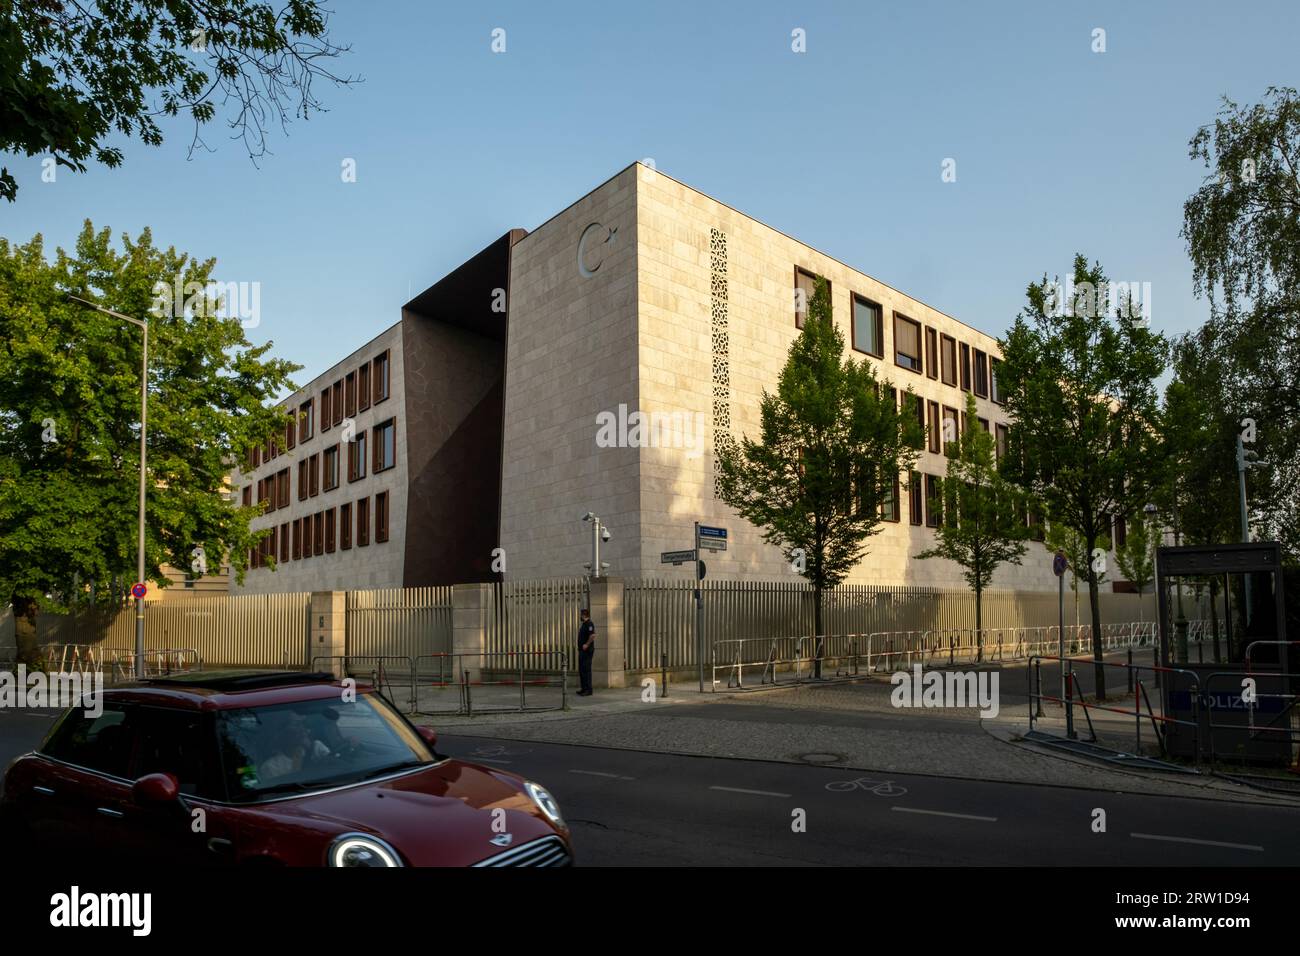 18.06.2022, Germany, Berlin, Berlin - Embassy of the Republic of Turkey at Tiergartenstrasse. 00A220618D307CAROEX.JPG [MODEL RELEASE: NO, PROPERTY REL Stock Photo